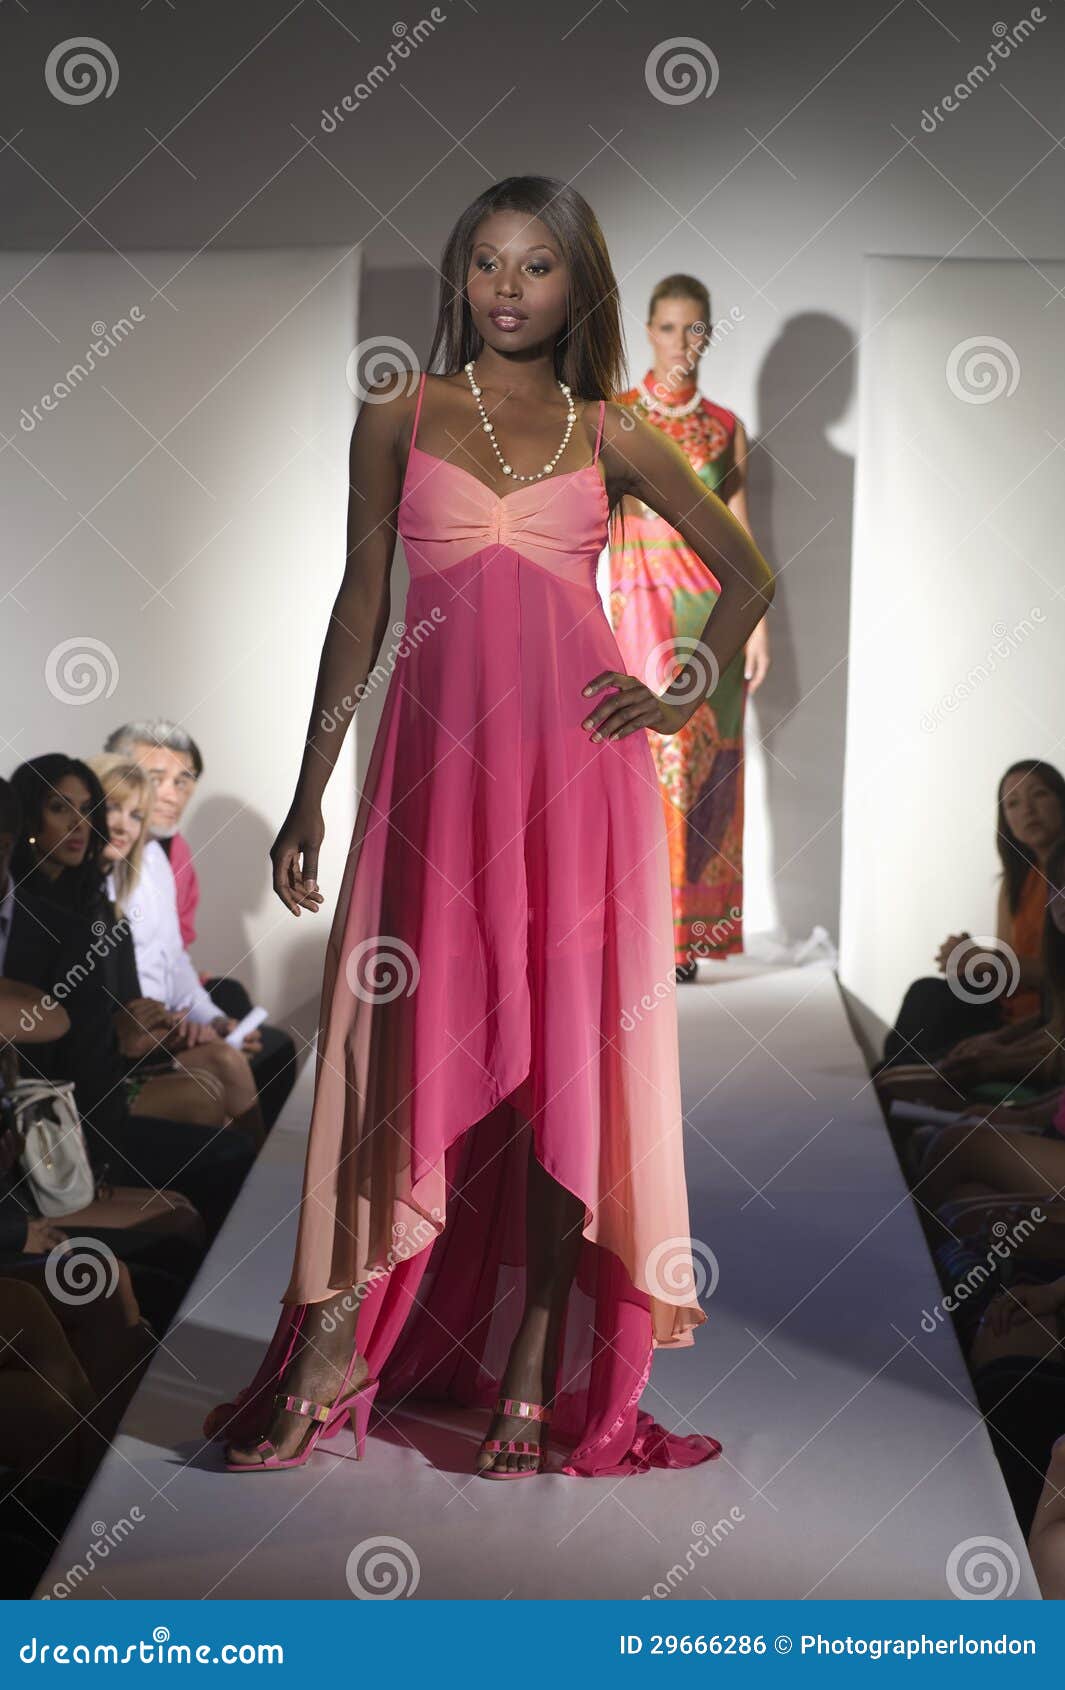 woman in pink dress on fashion catwalk